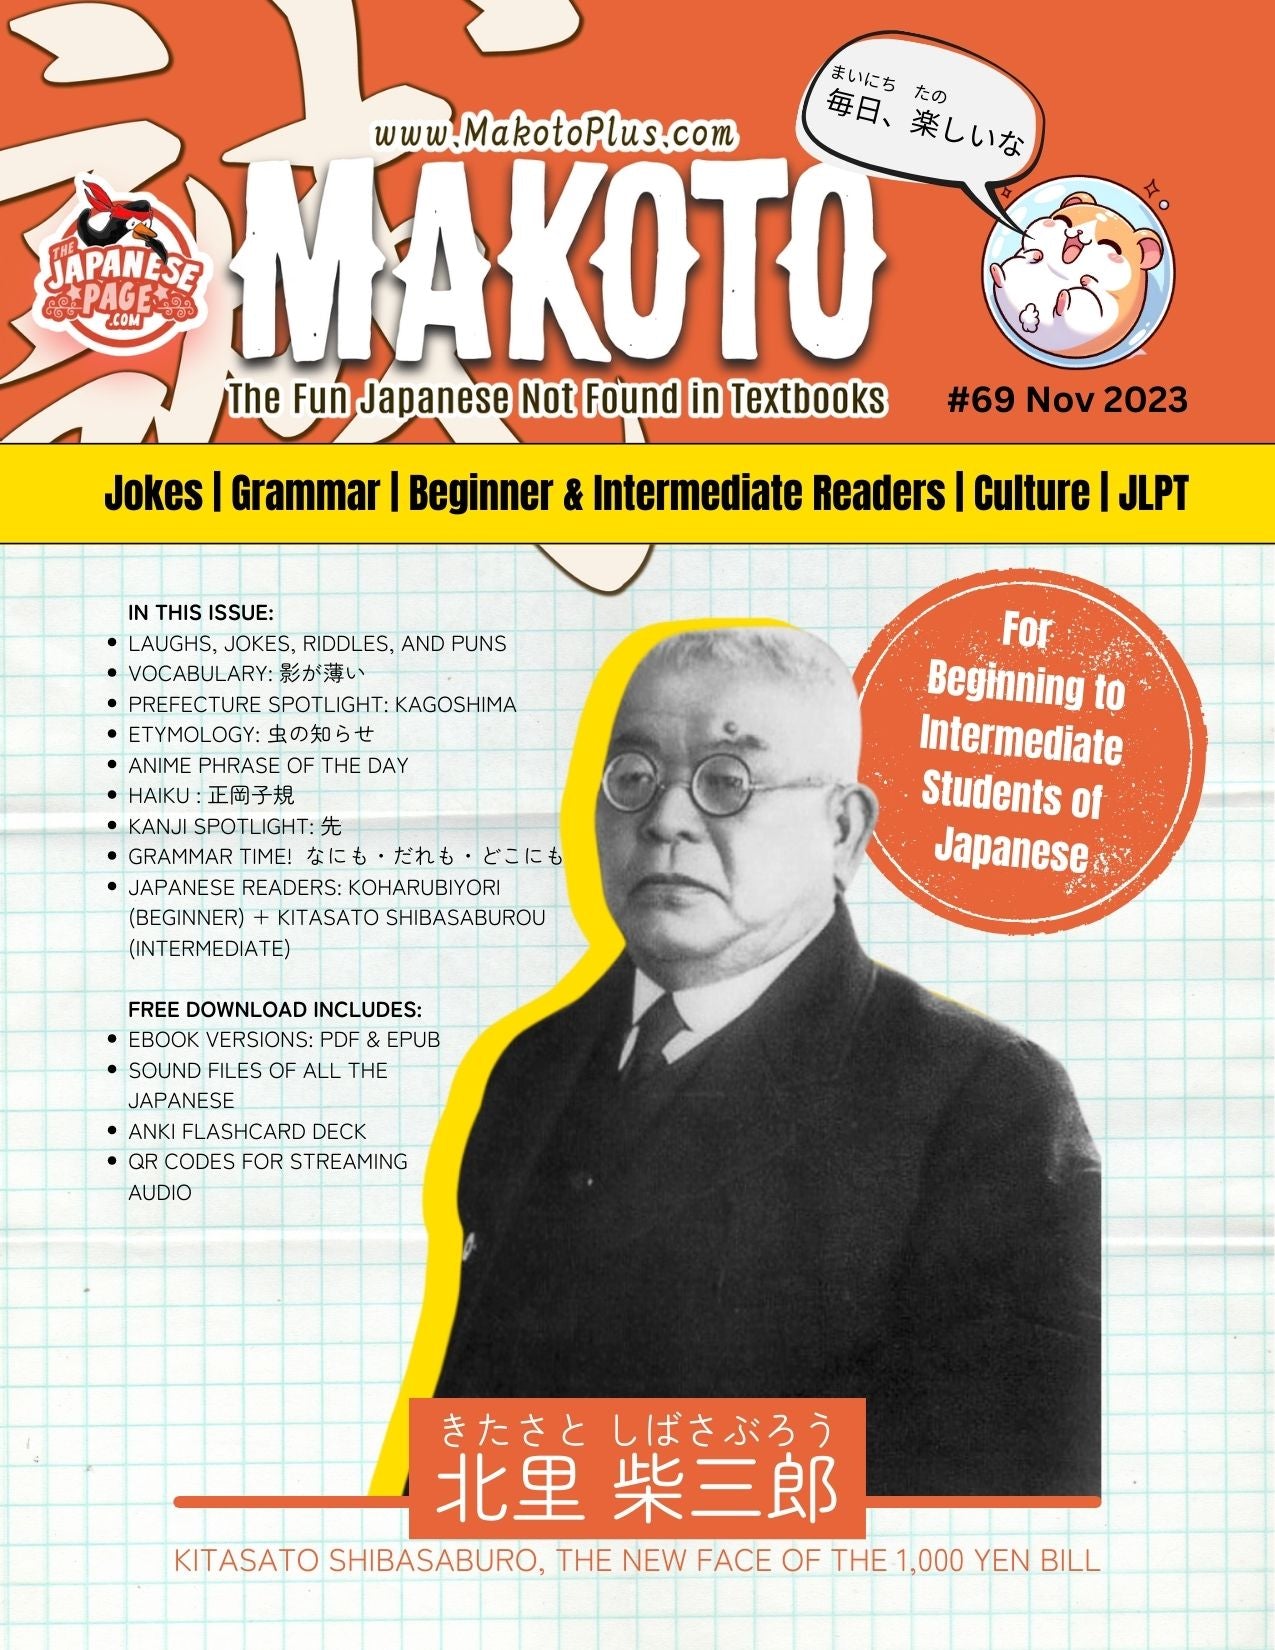 Makoto Magazine #69 - All the Fun Japanese Not Found in Textbooks